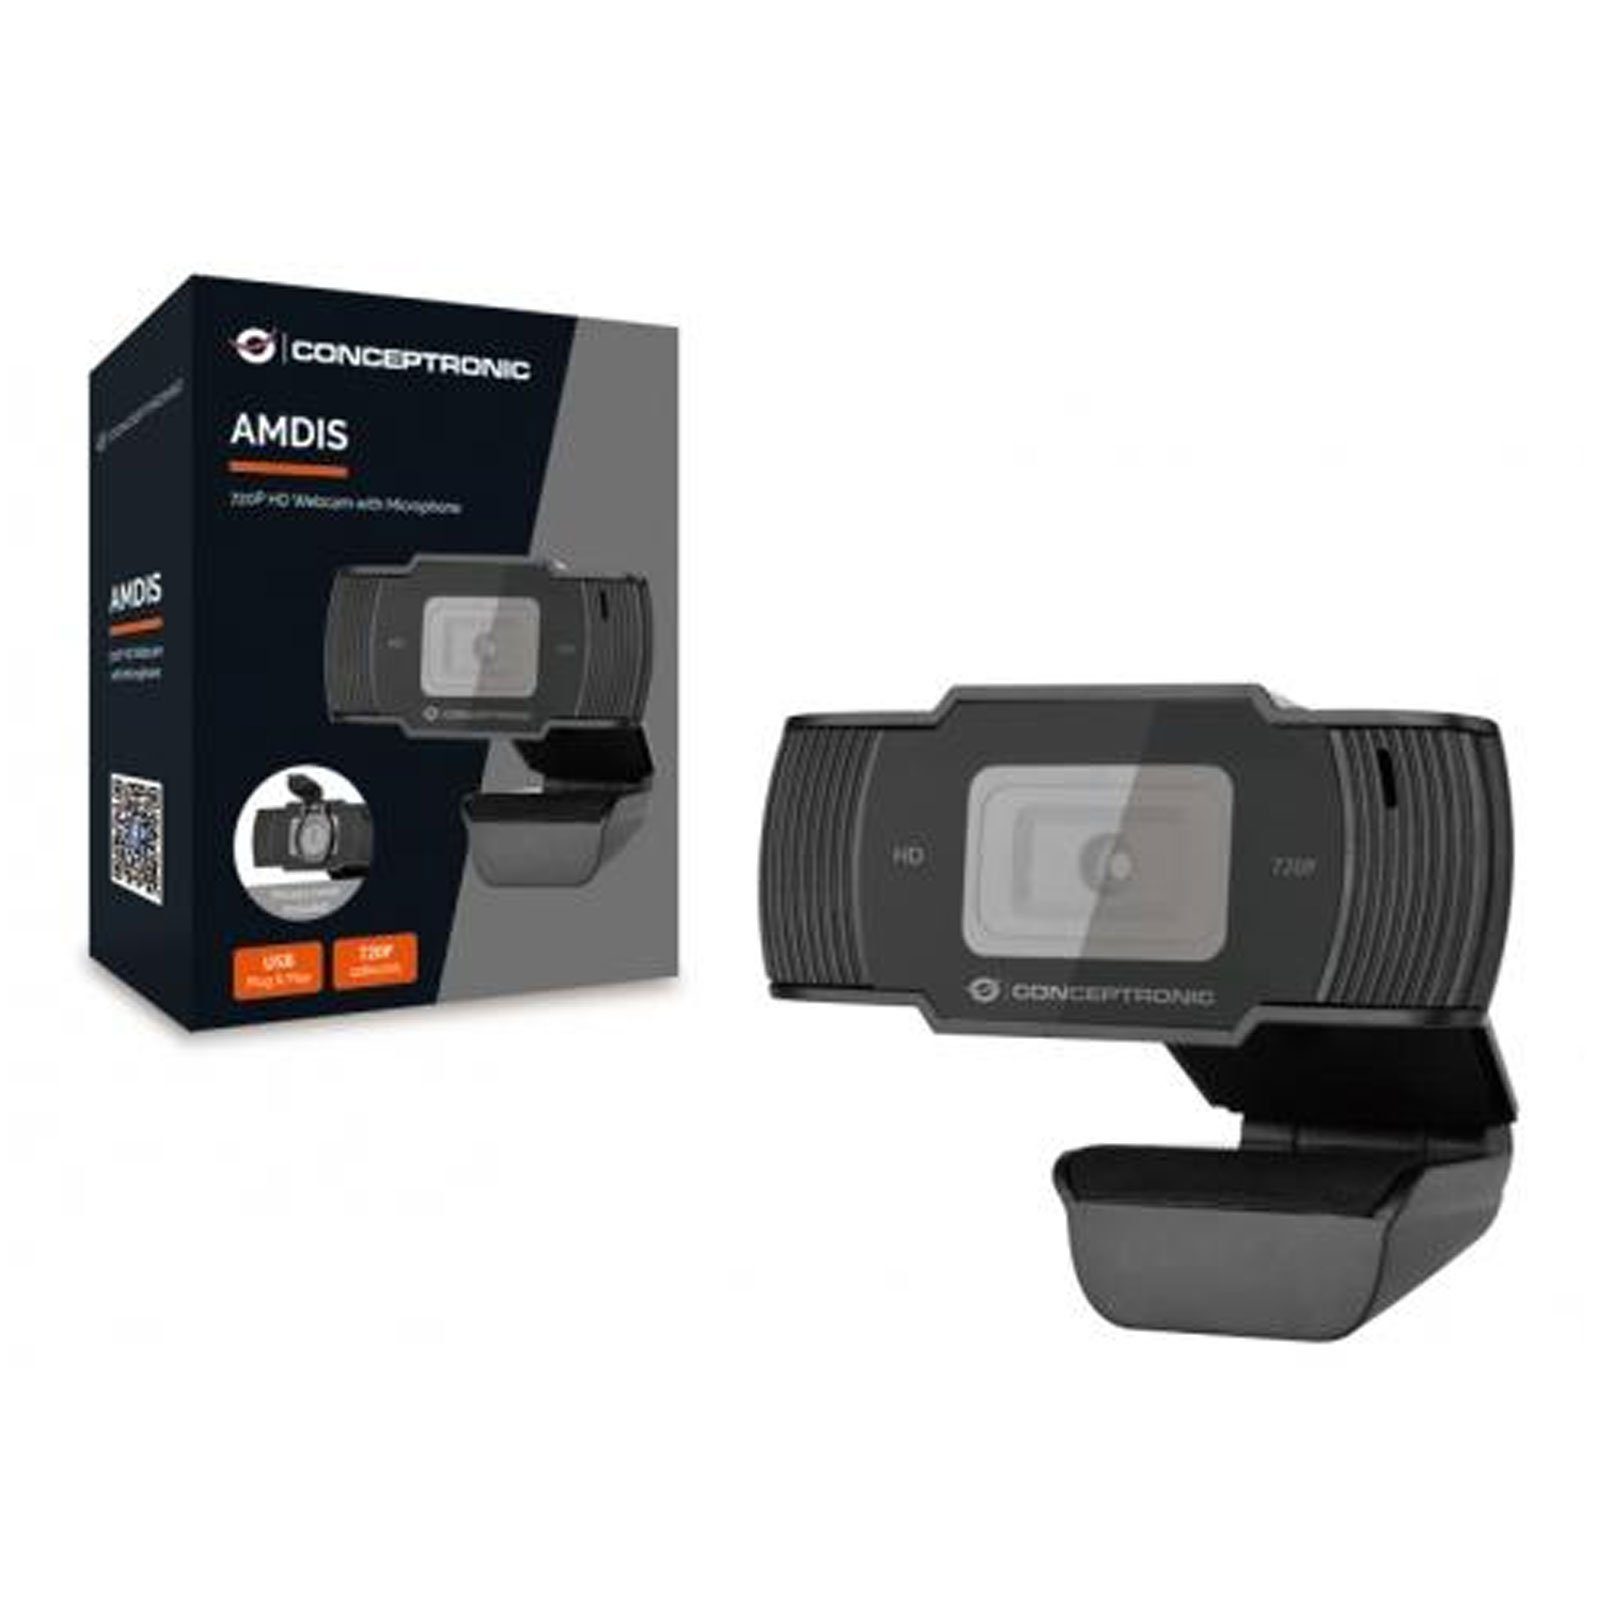 Conceptronic Amdis 720P HD Webcam Webcam Microphone 